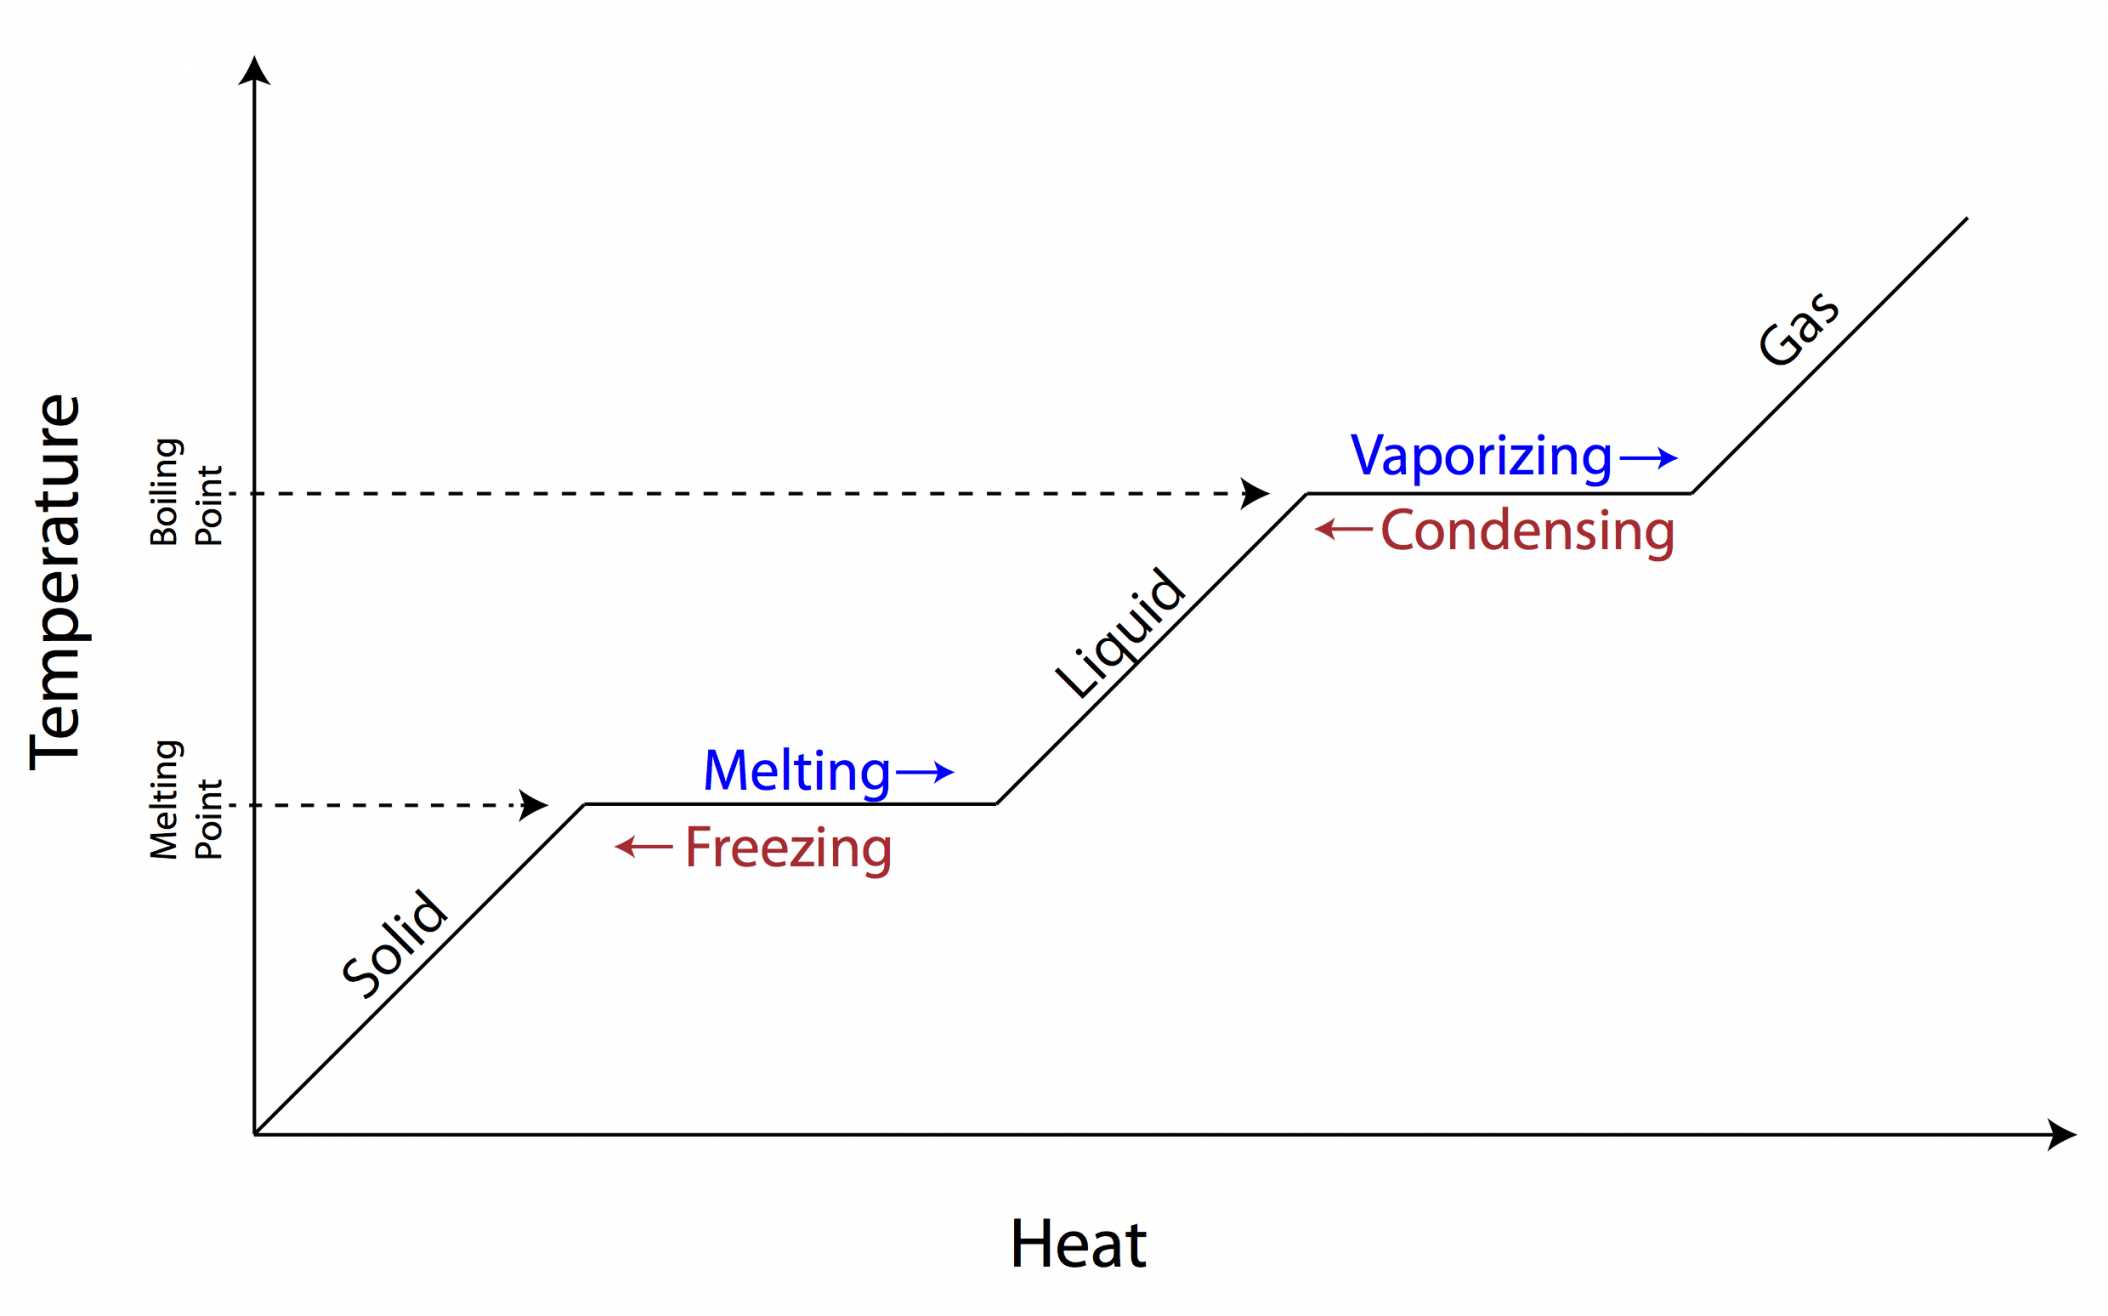 Specific Heat Calculations Worksheet as Well as Worksheet Heat and Temperature Worksheet Review Worksheet Heat